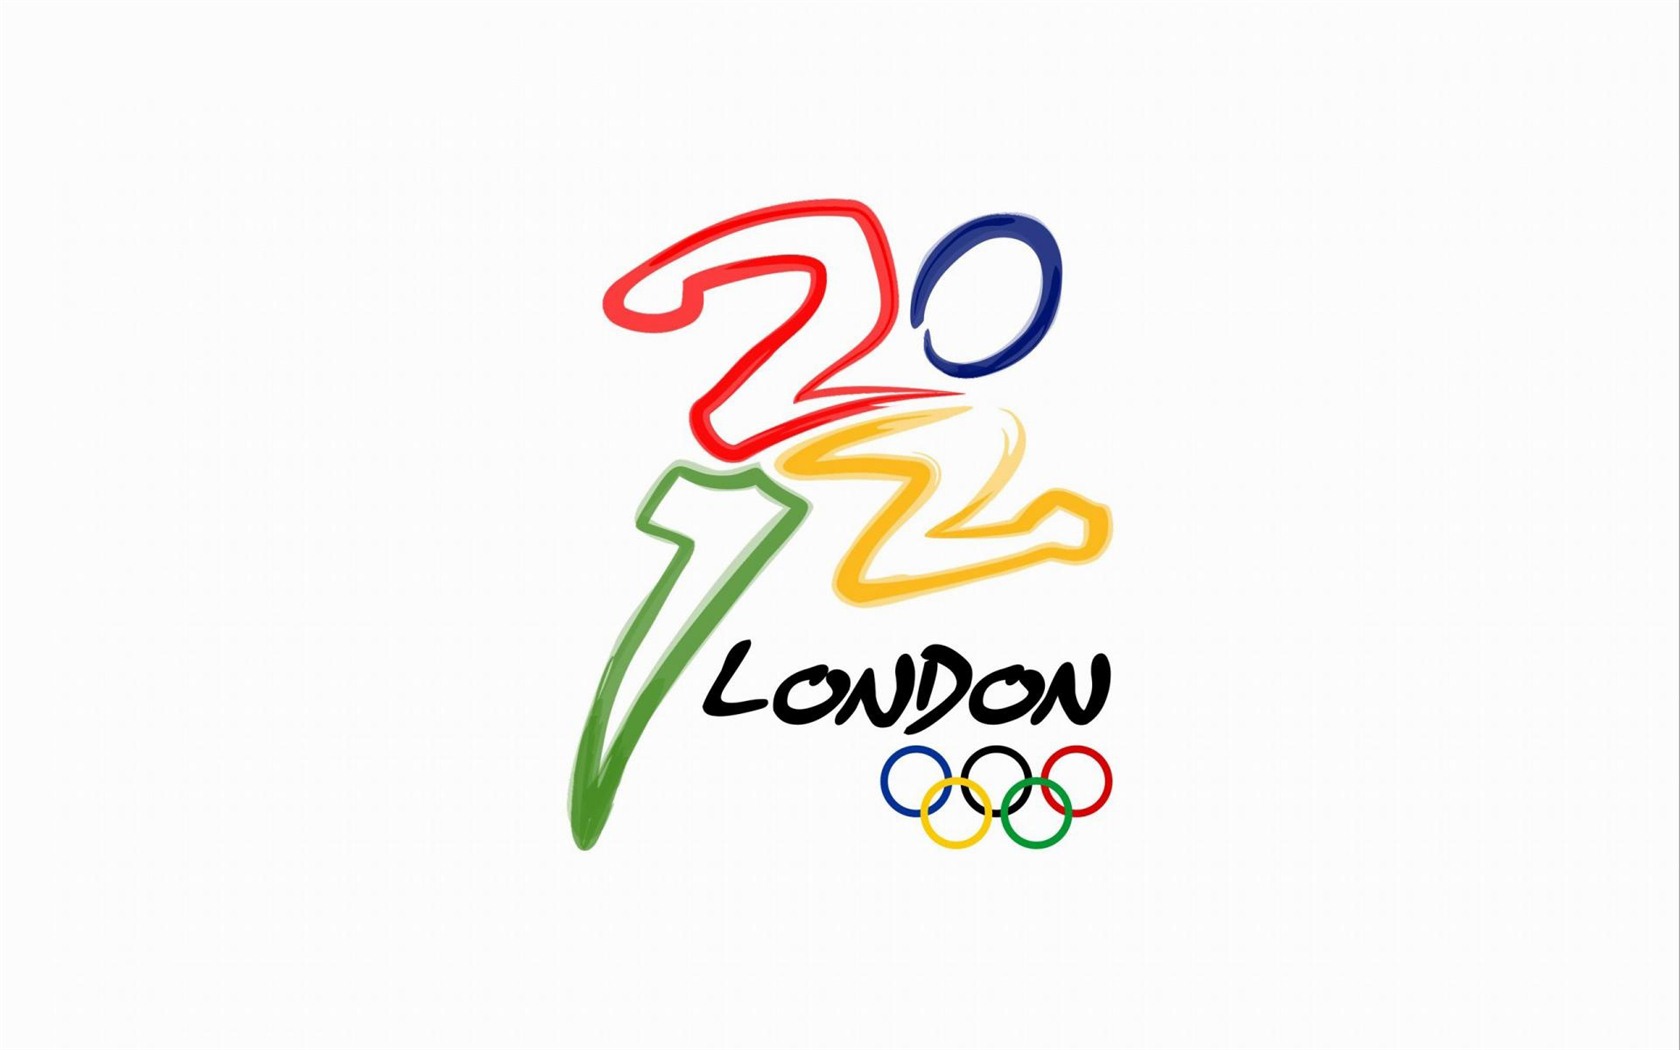 London 2012 Olympics theme wallpapers (2) #22 - 1680x1050